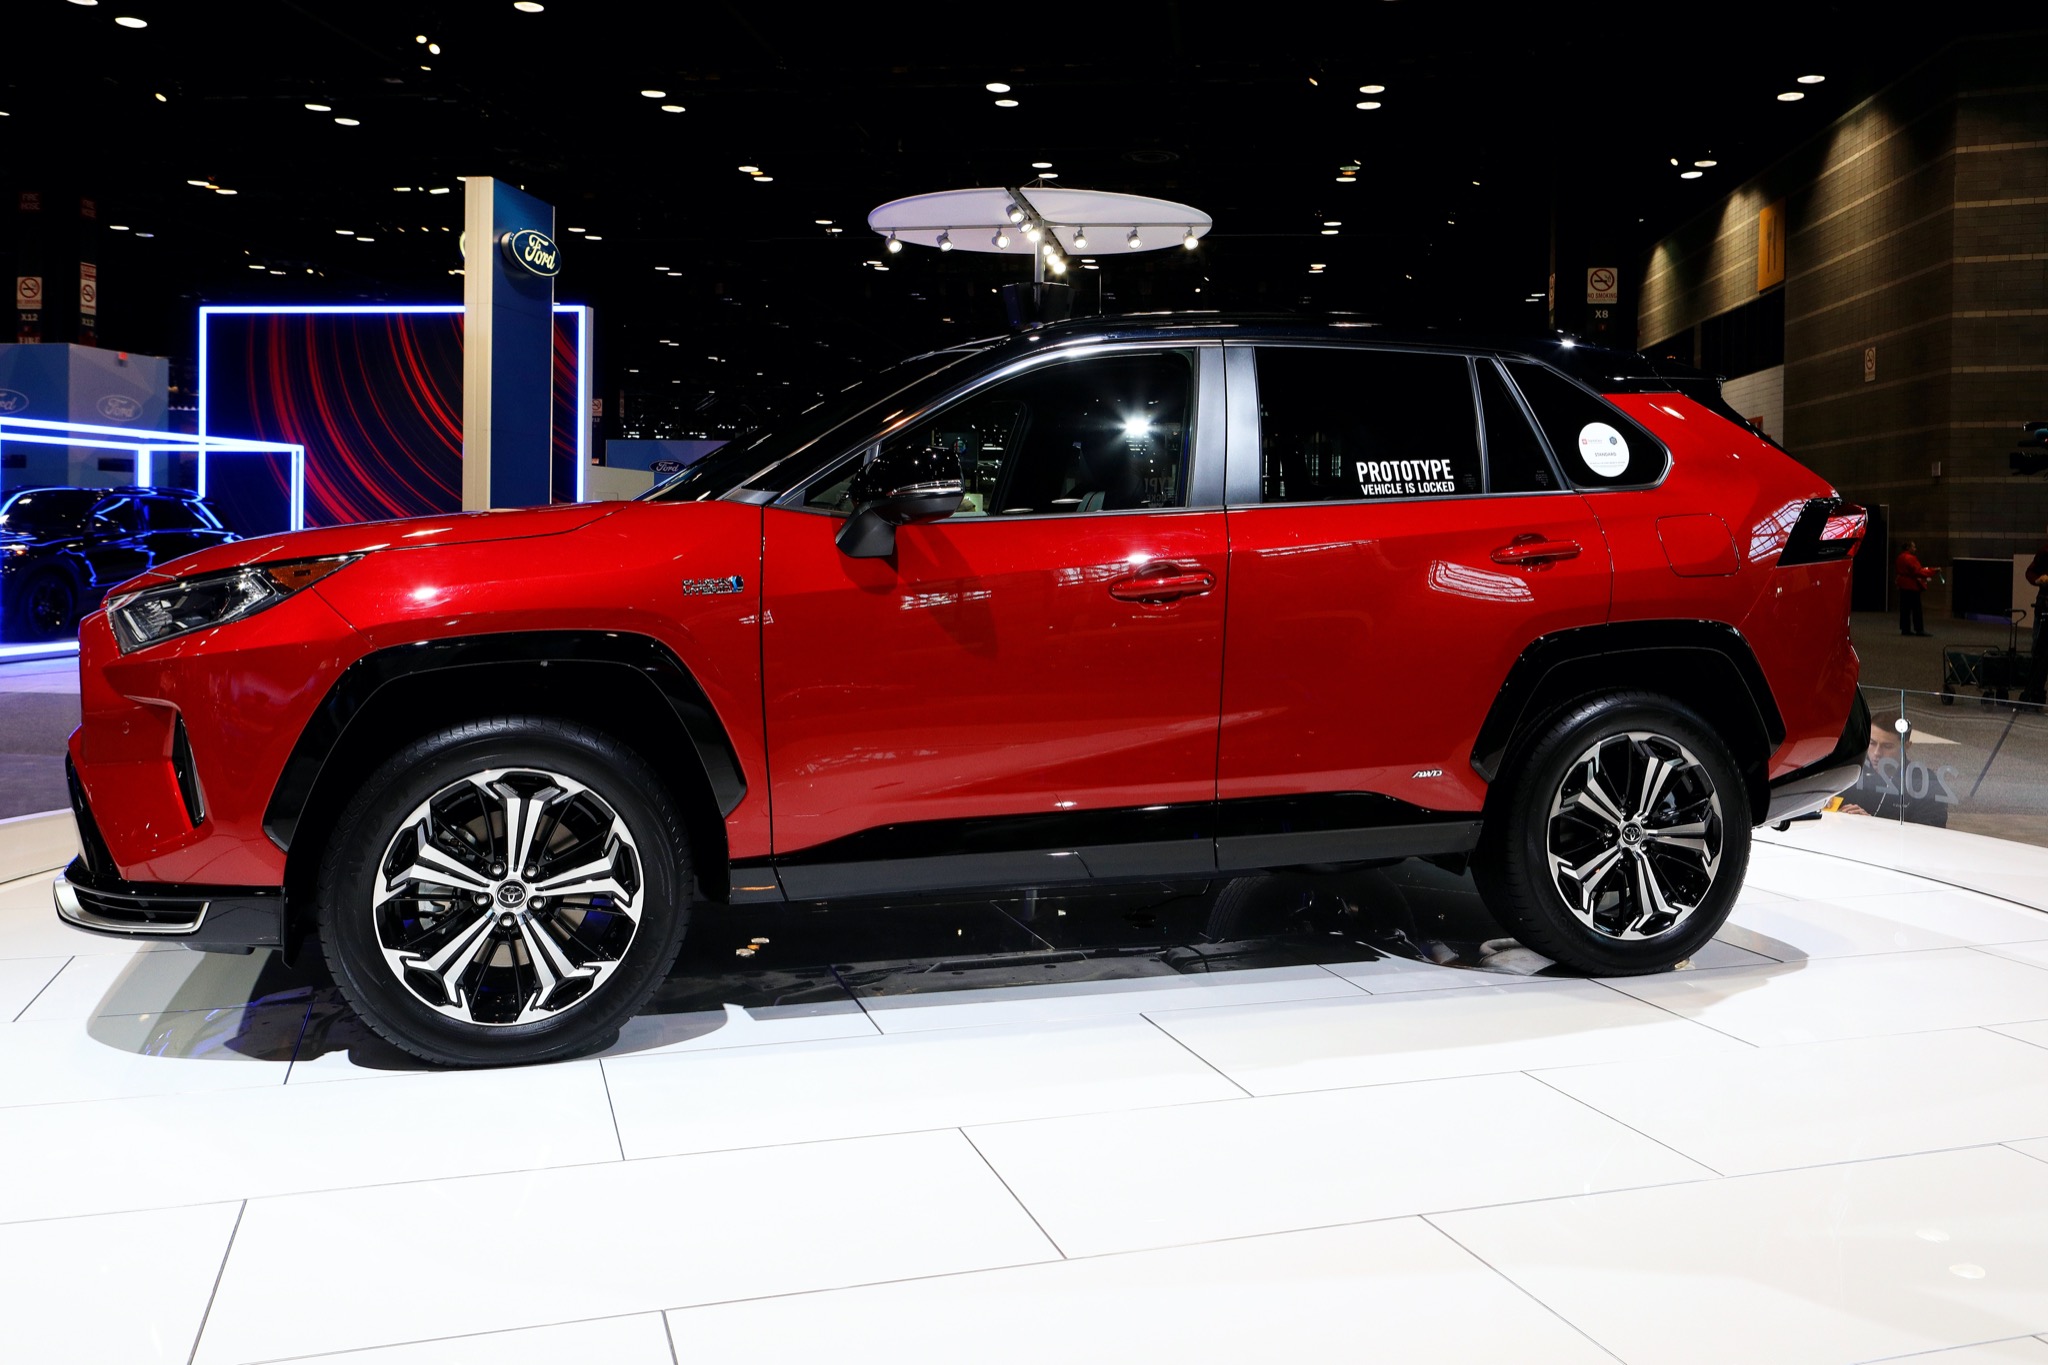 Oakland Toyota supplier accused of ‘value gouging’ for RAV4